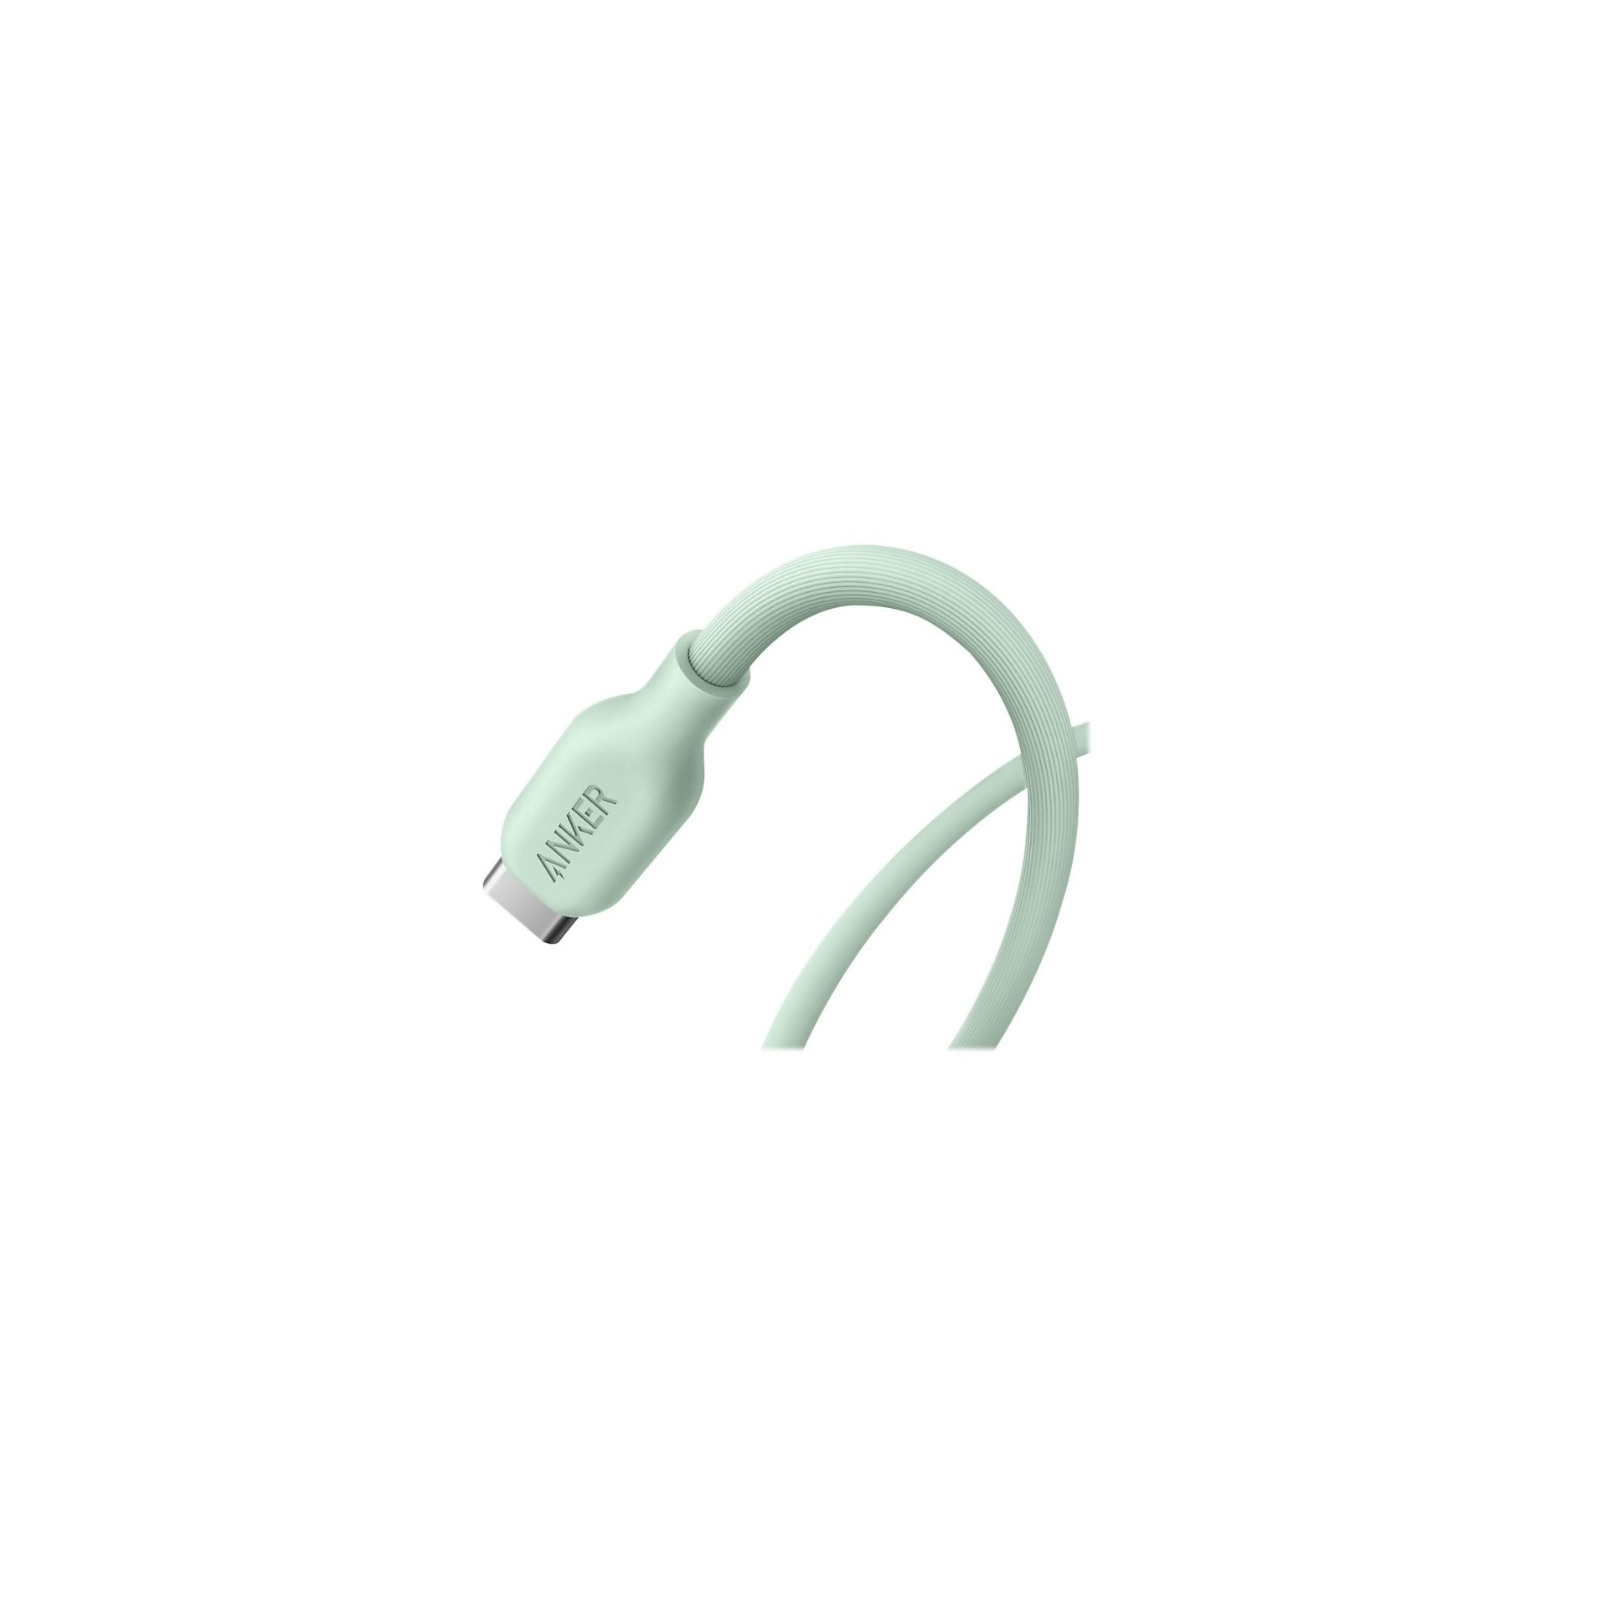 Дата кабель USB-C to Lightning 0.9m 541 Bio-Based Green Anker (A80A1G61) изображение 2